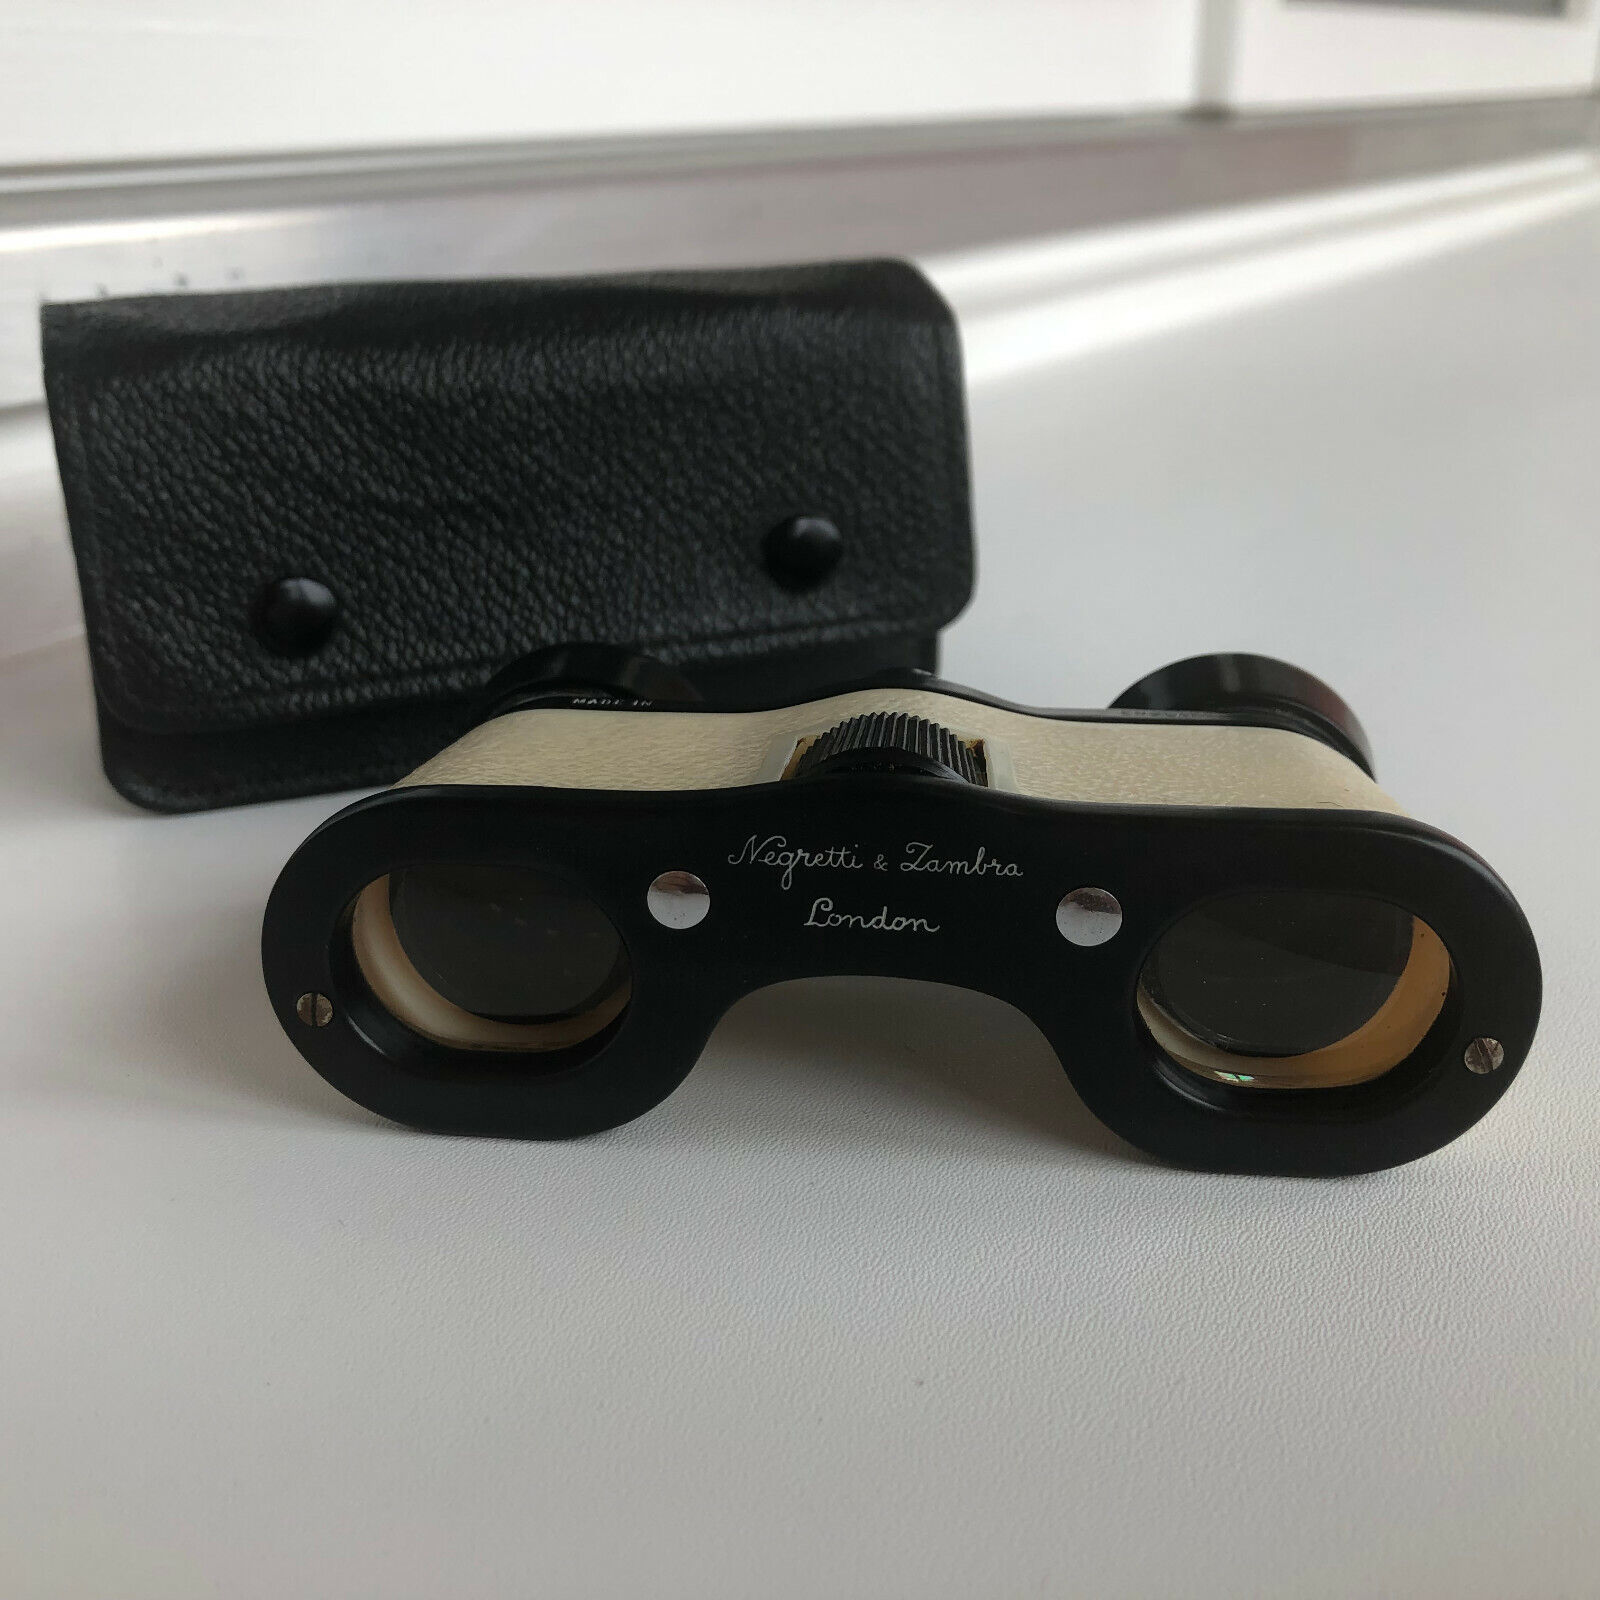 Negretti & Zambra London Opera Glasses Compact Vintage Binoculars Goedkoop, 100% nieuw!